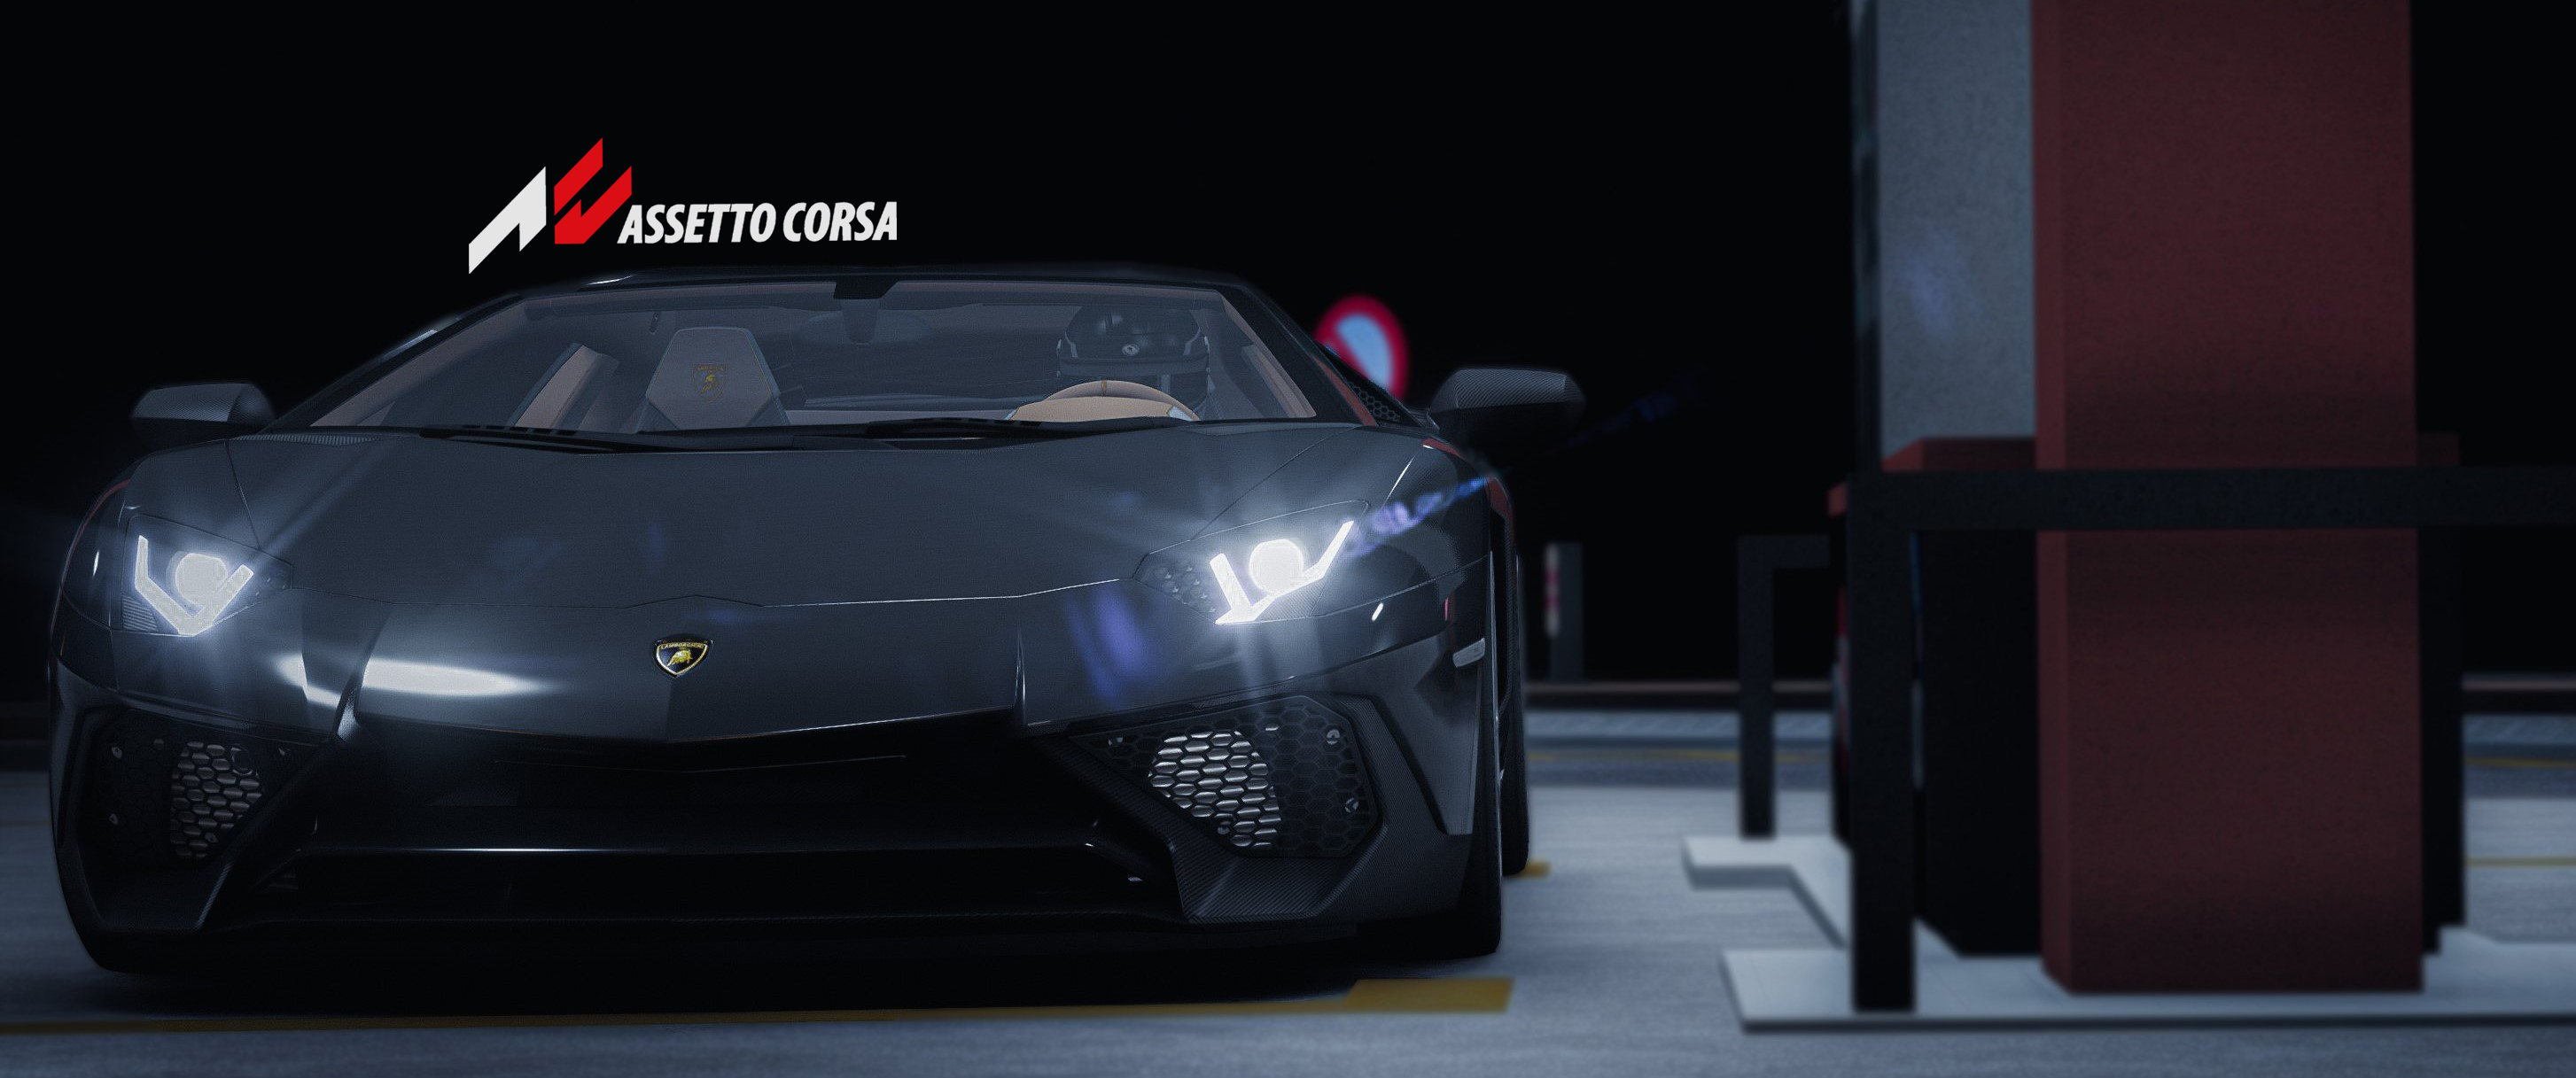 BEST Car Mods BMW EDITION 2021  Assetto Corsa Mod Showcase 